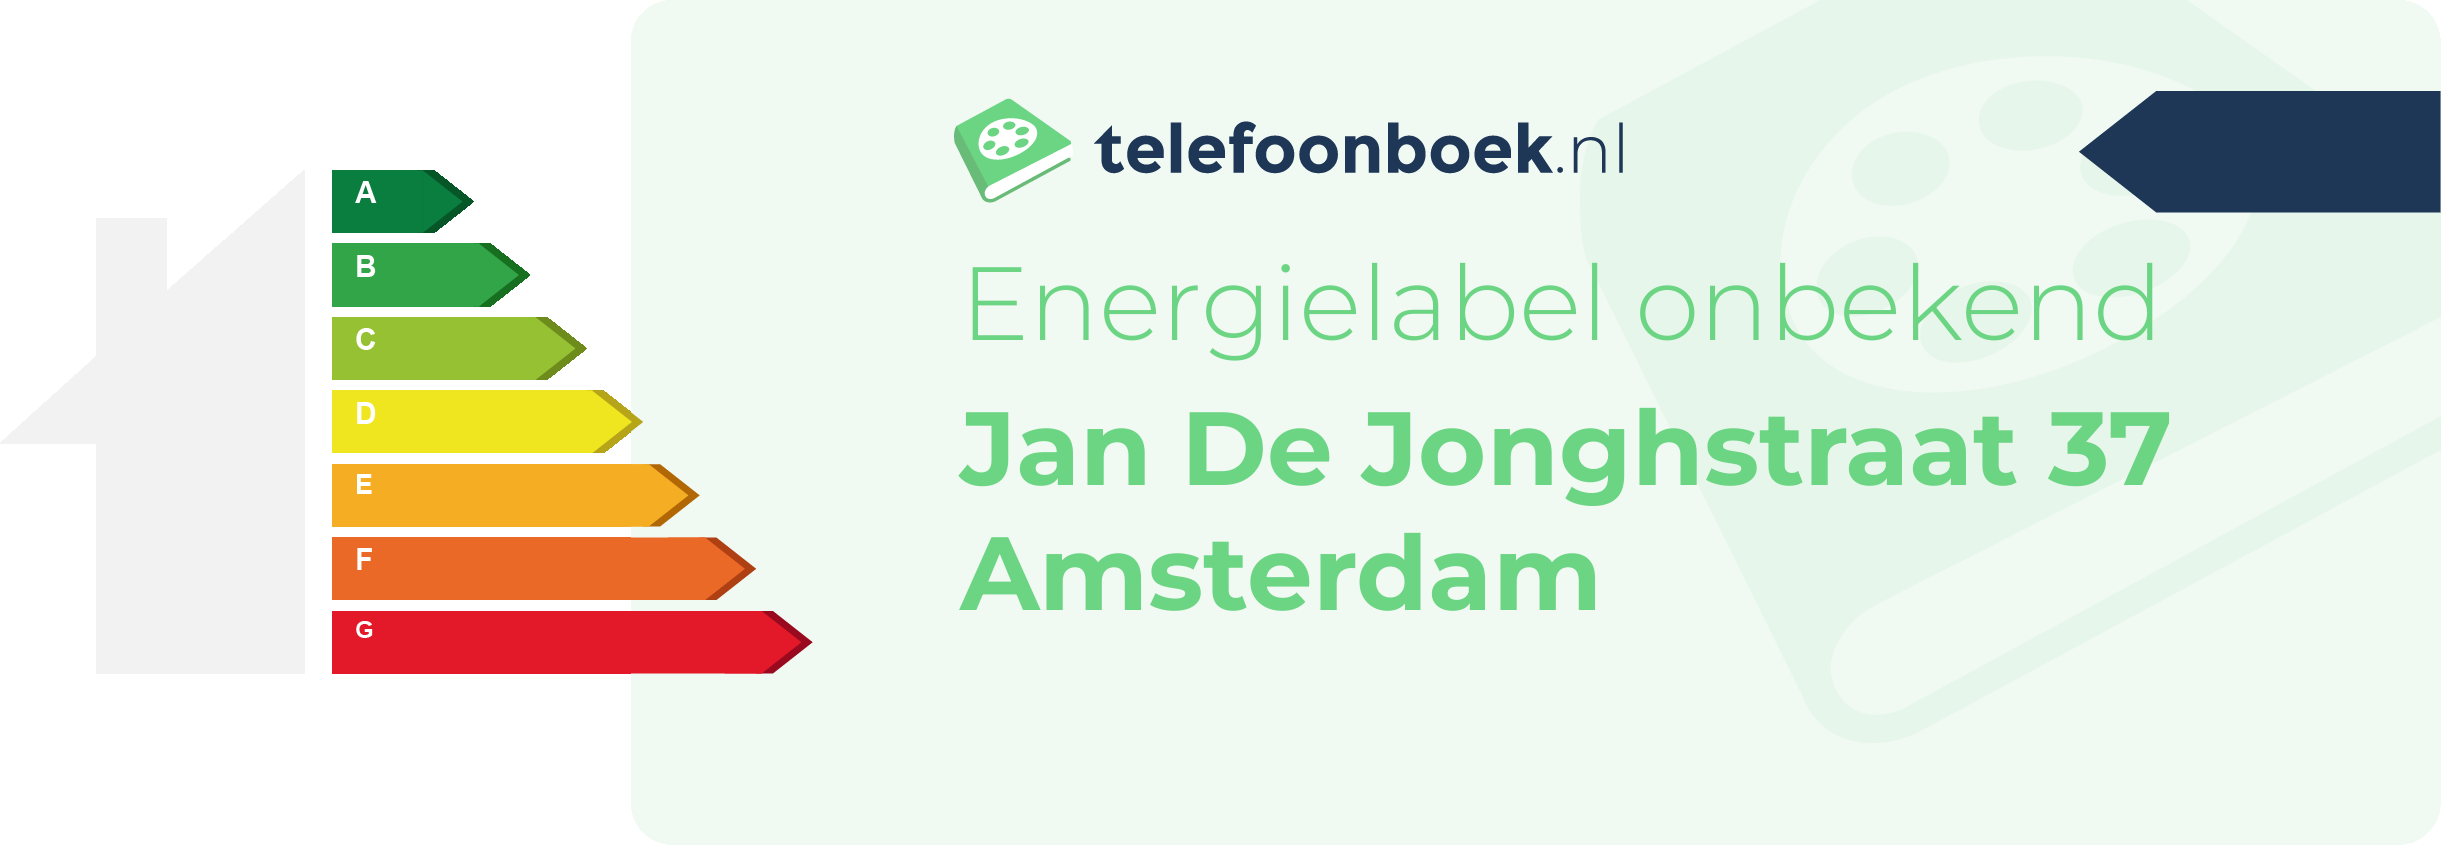 Energielabel Jan De Jonghstraat 37 Amsterdam